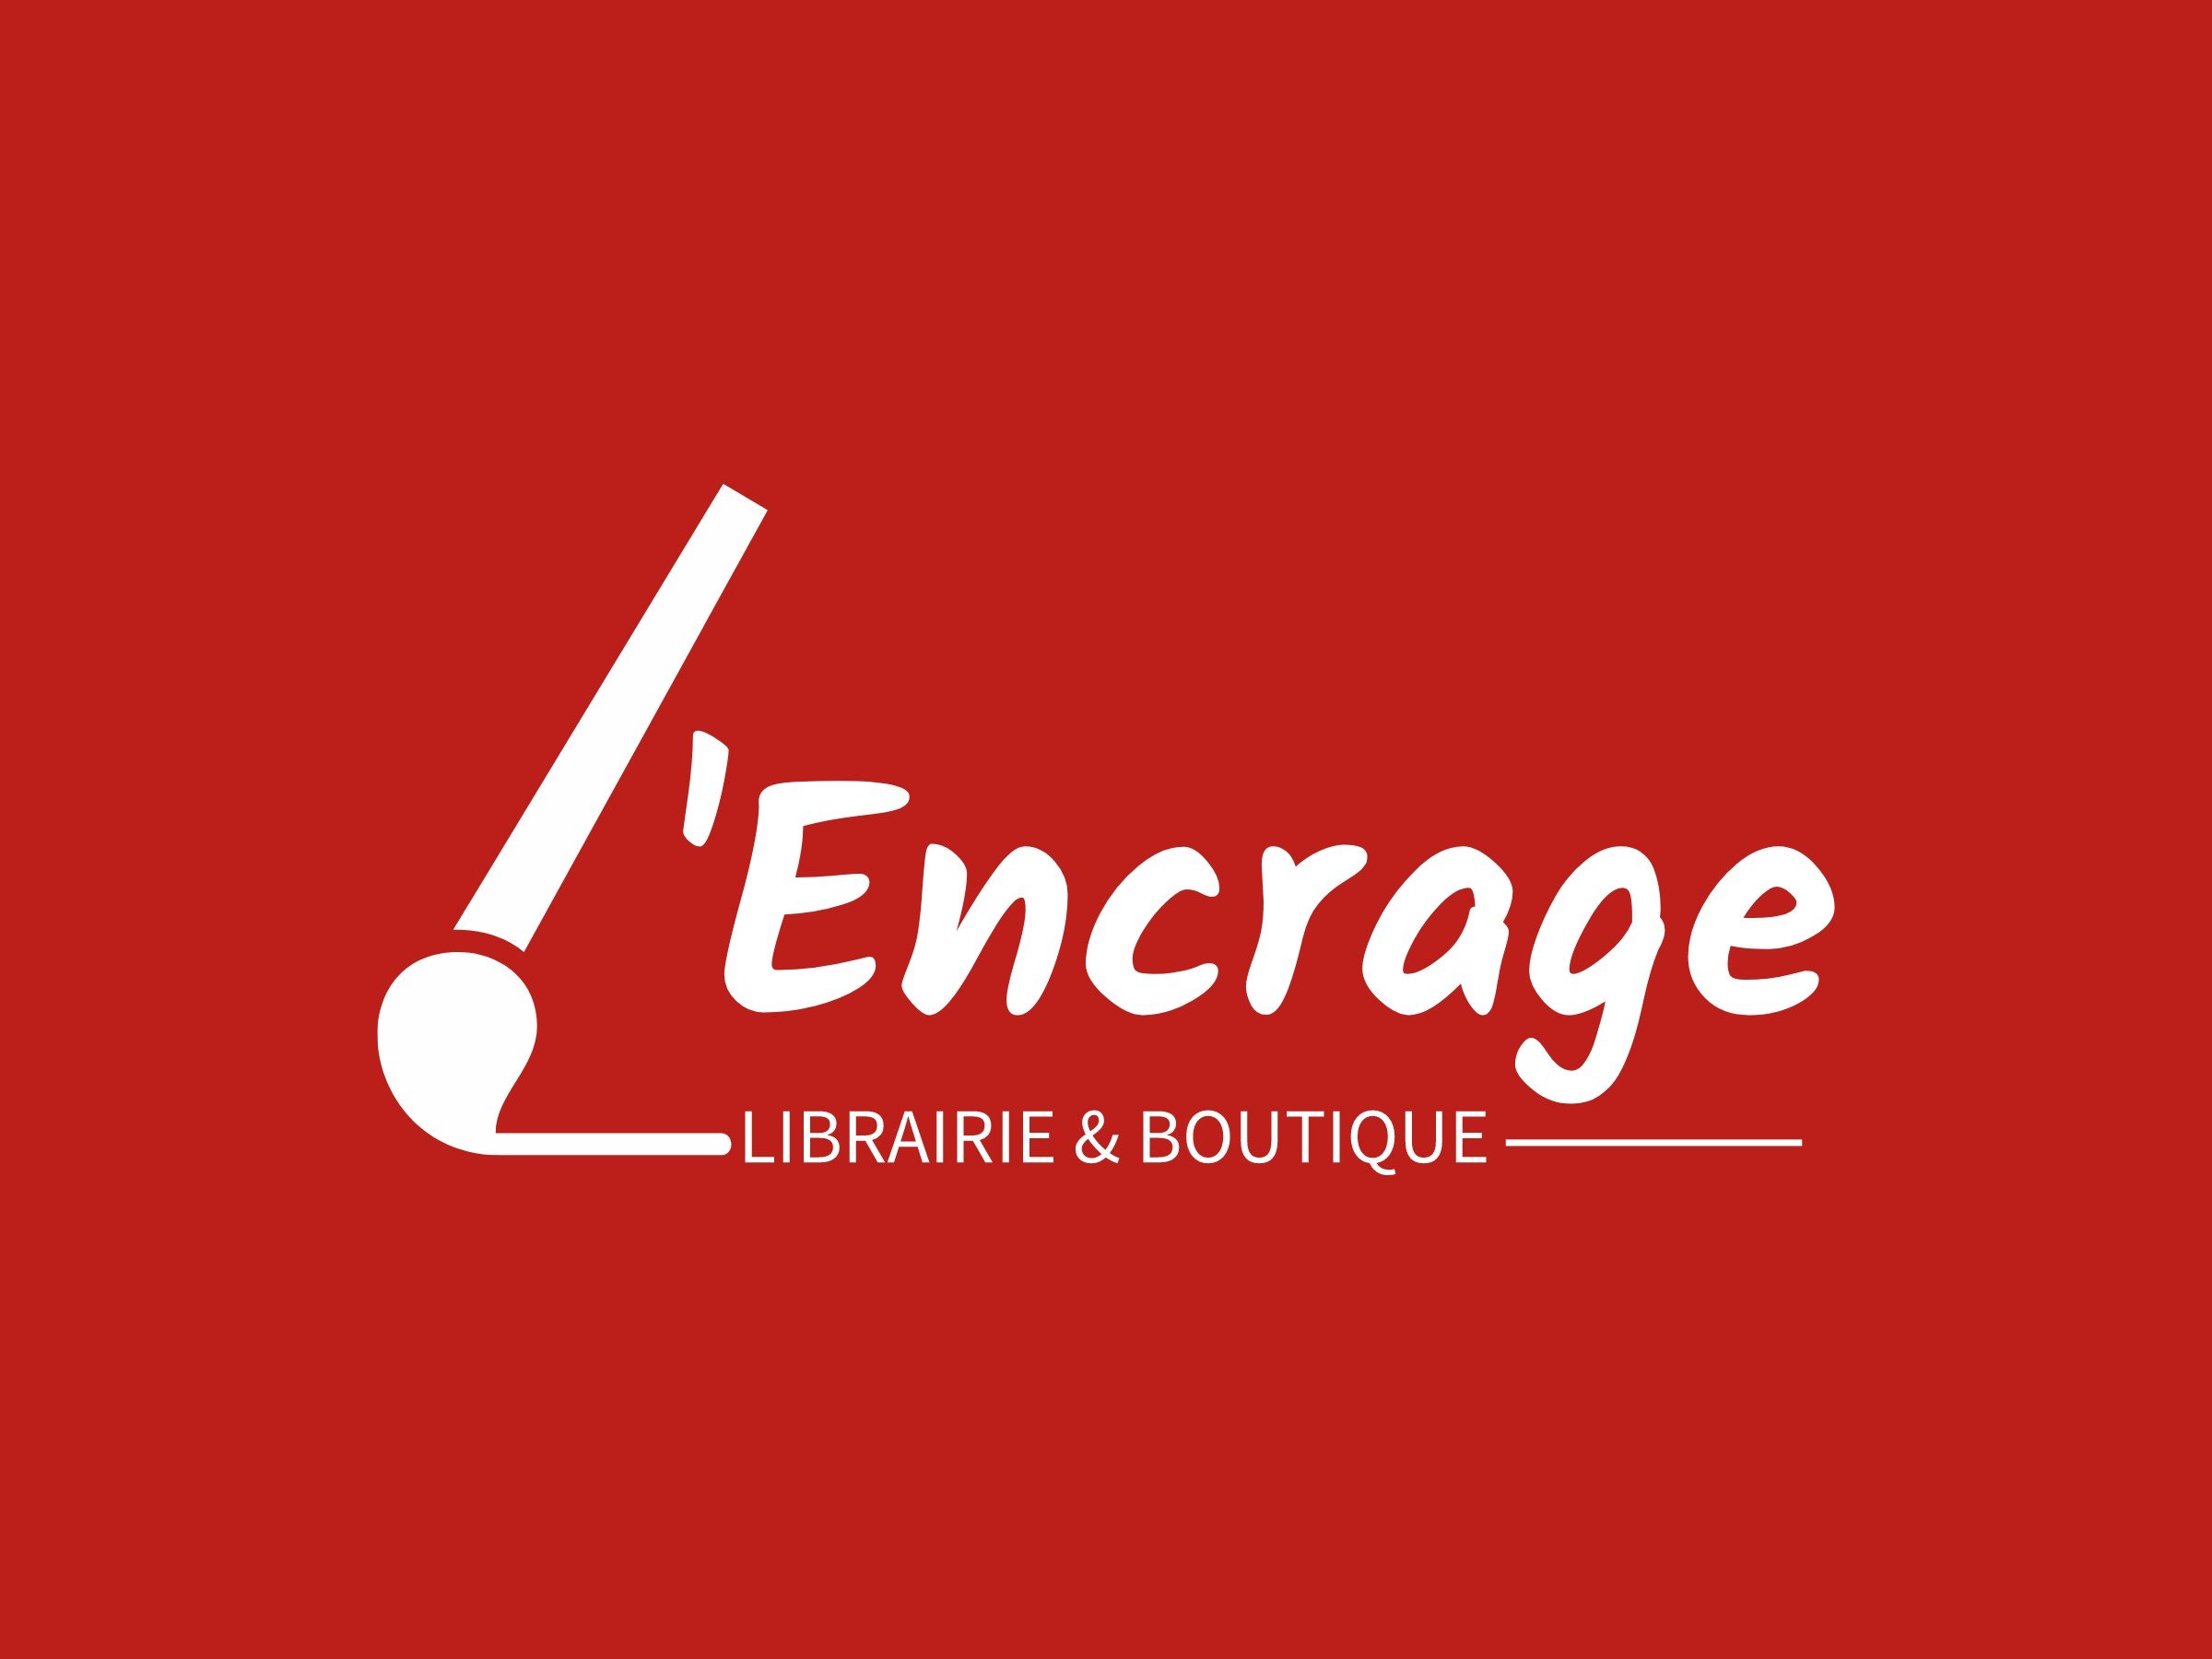 'Encrage - Librairie & Boutique